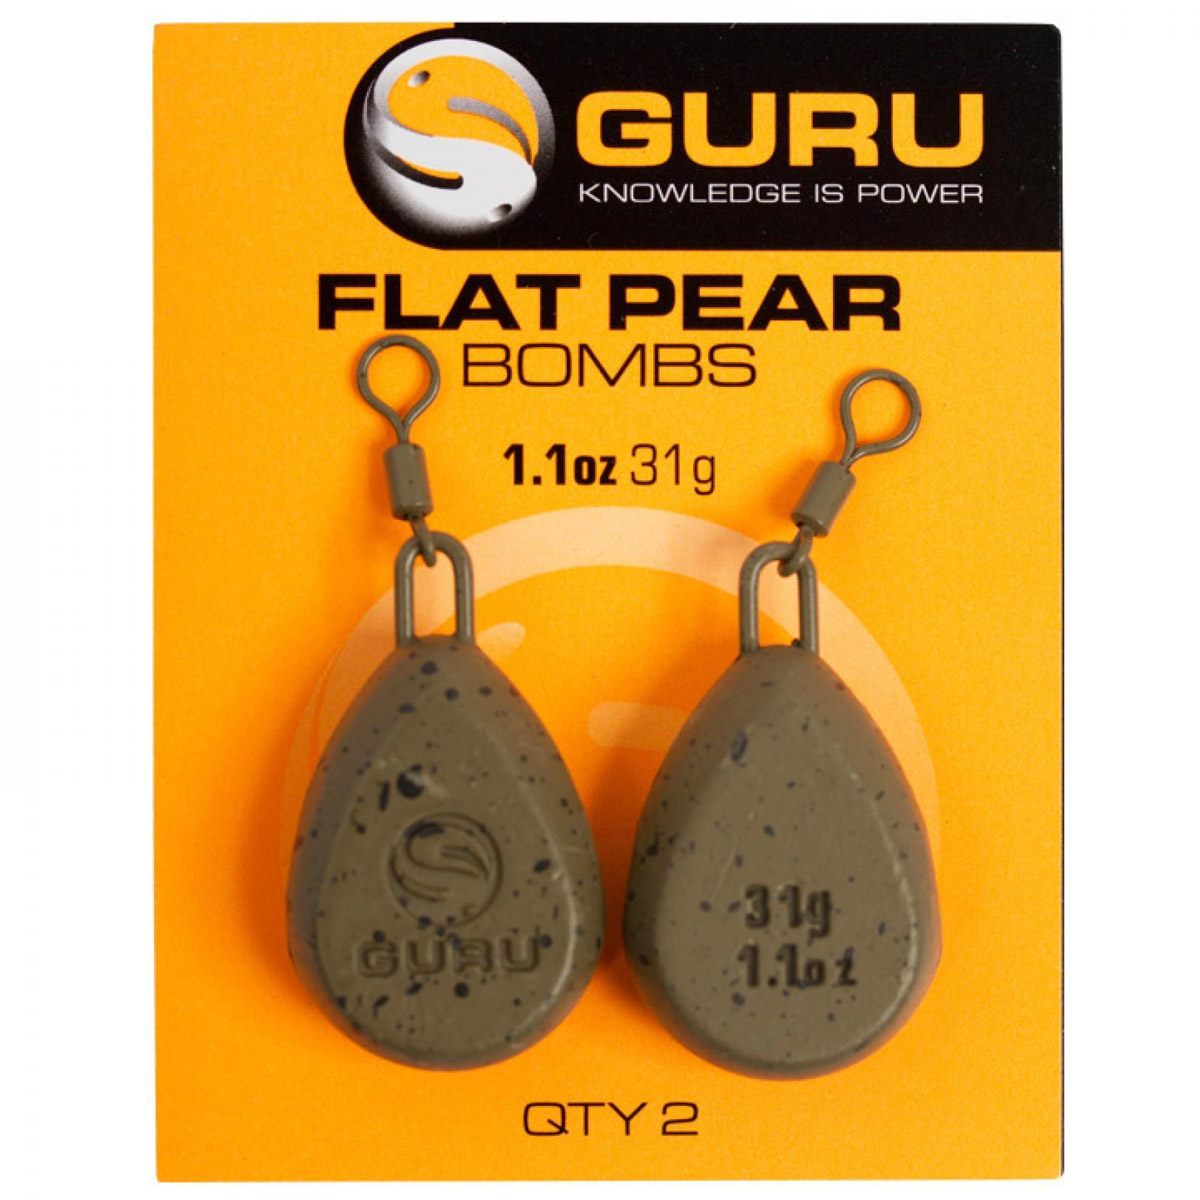 Guru Flat Pear Bombs